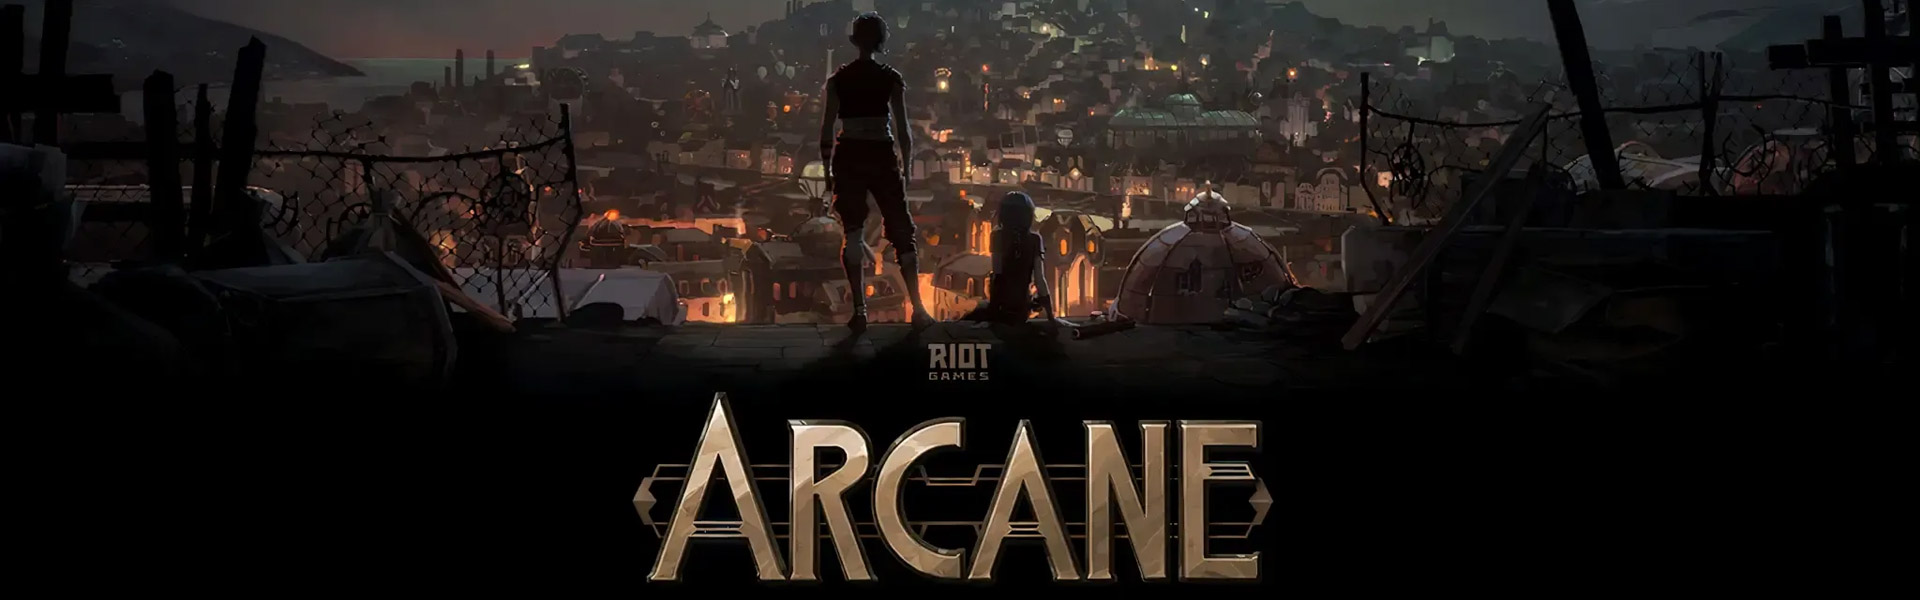 Review Series Arcane: Nợ Cũ Phải Trả của Netflix